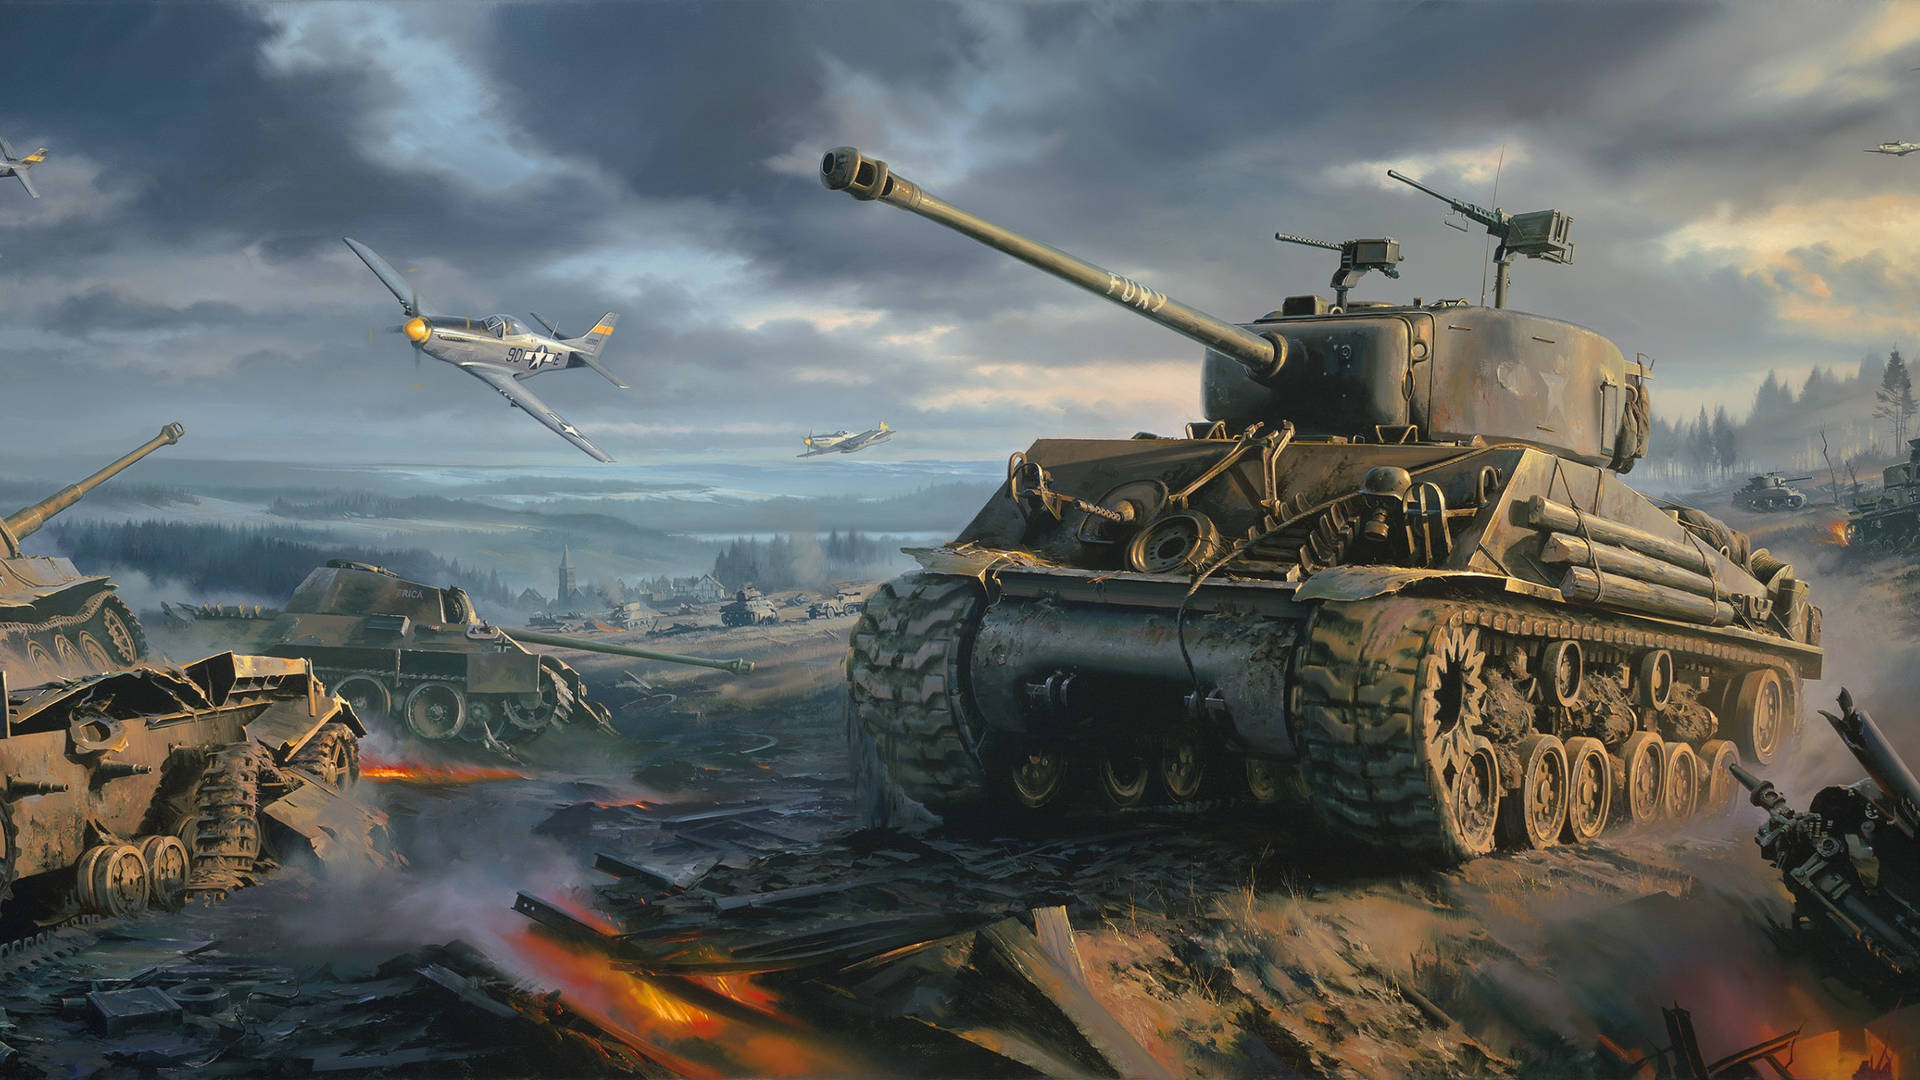 Big Military Tanks For Battle Wallpaper